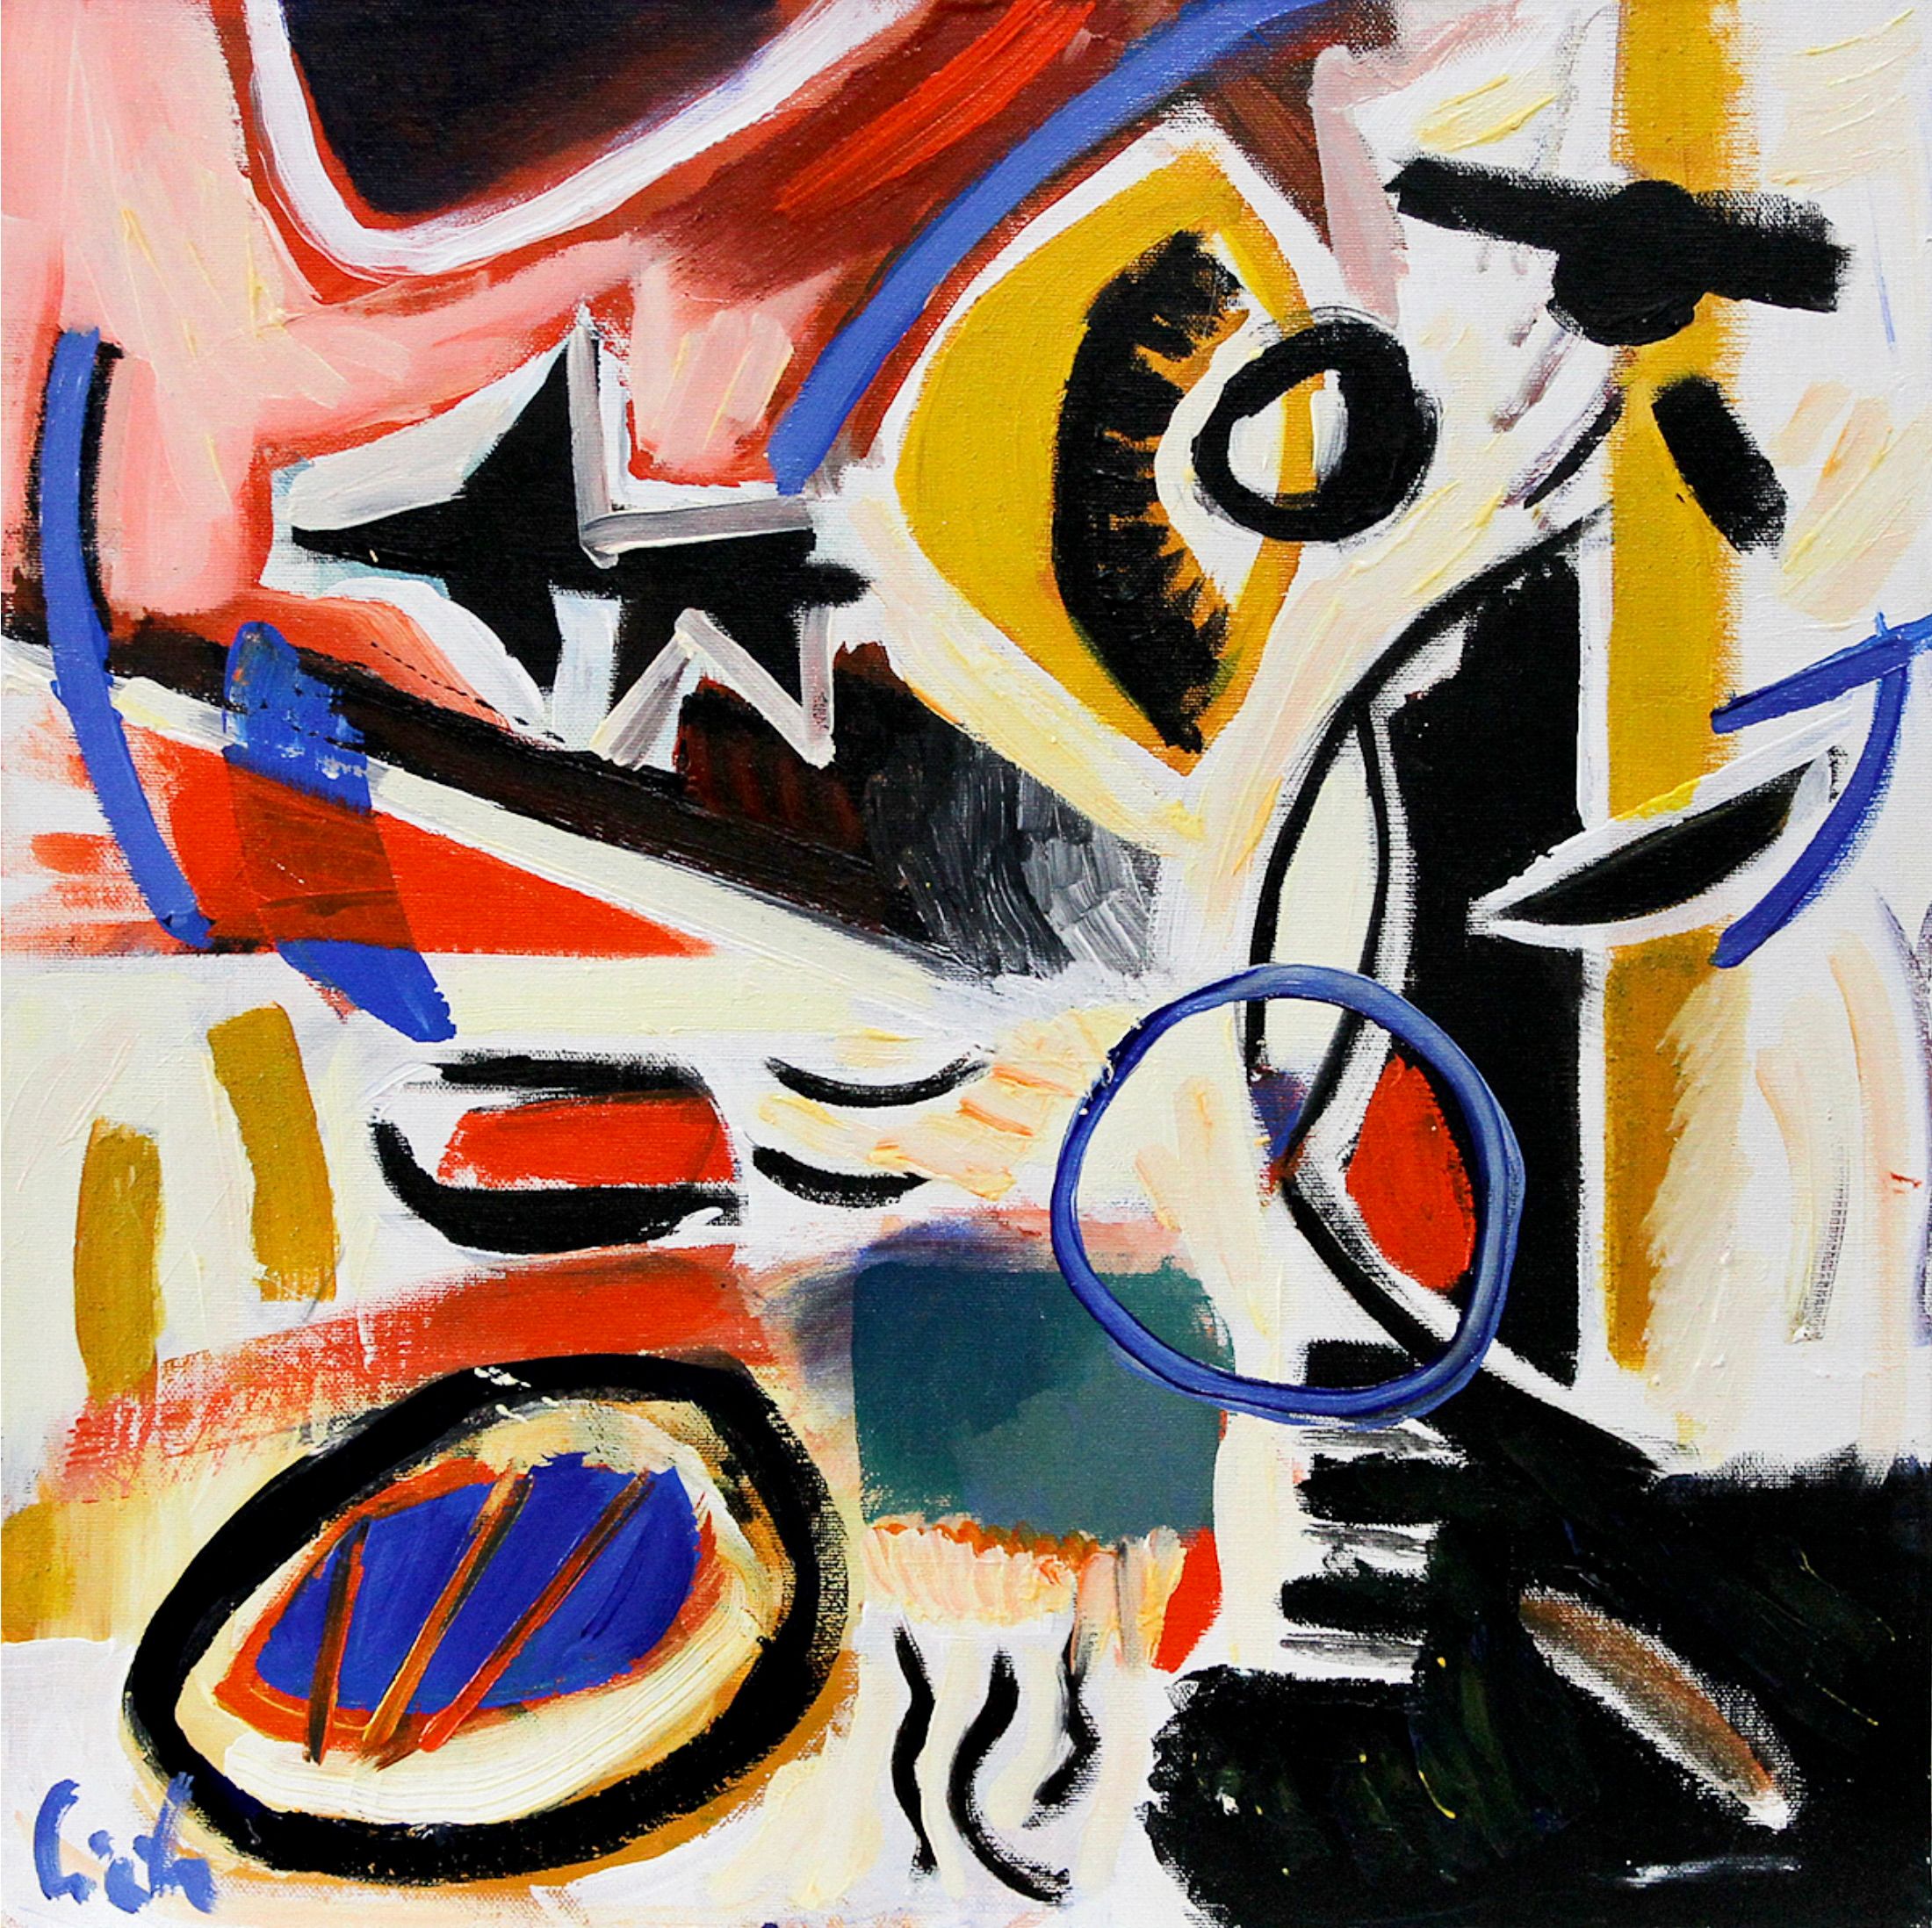 MECESLA Maciej Cieśla, "Abstract composition 42", Peinture abstraite colorée sur toile